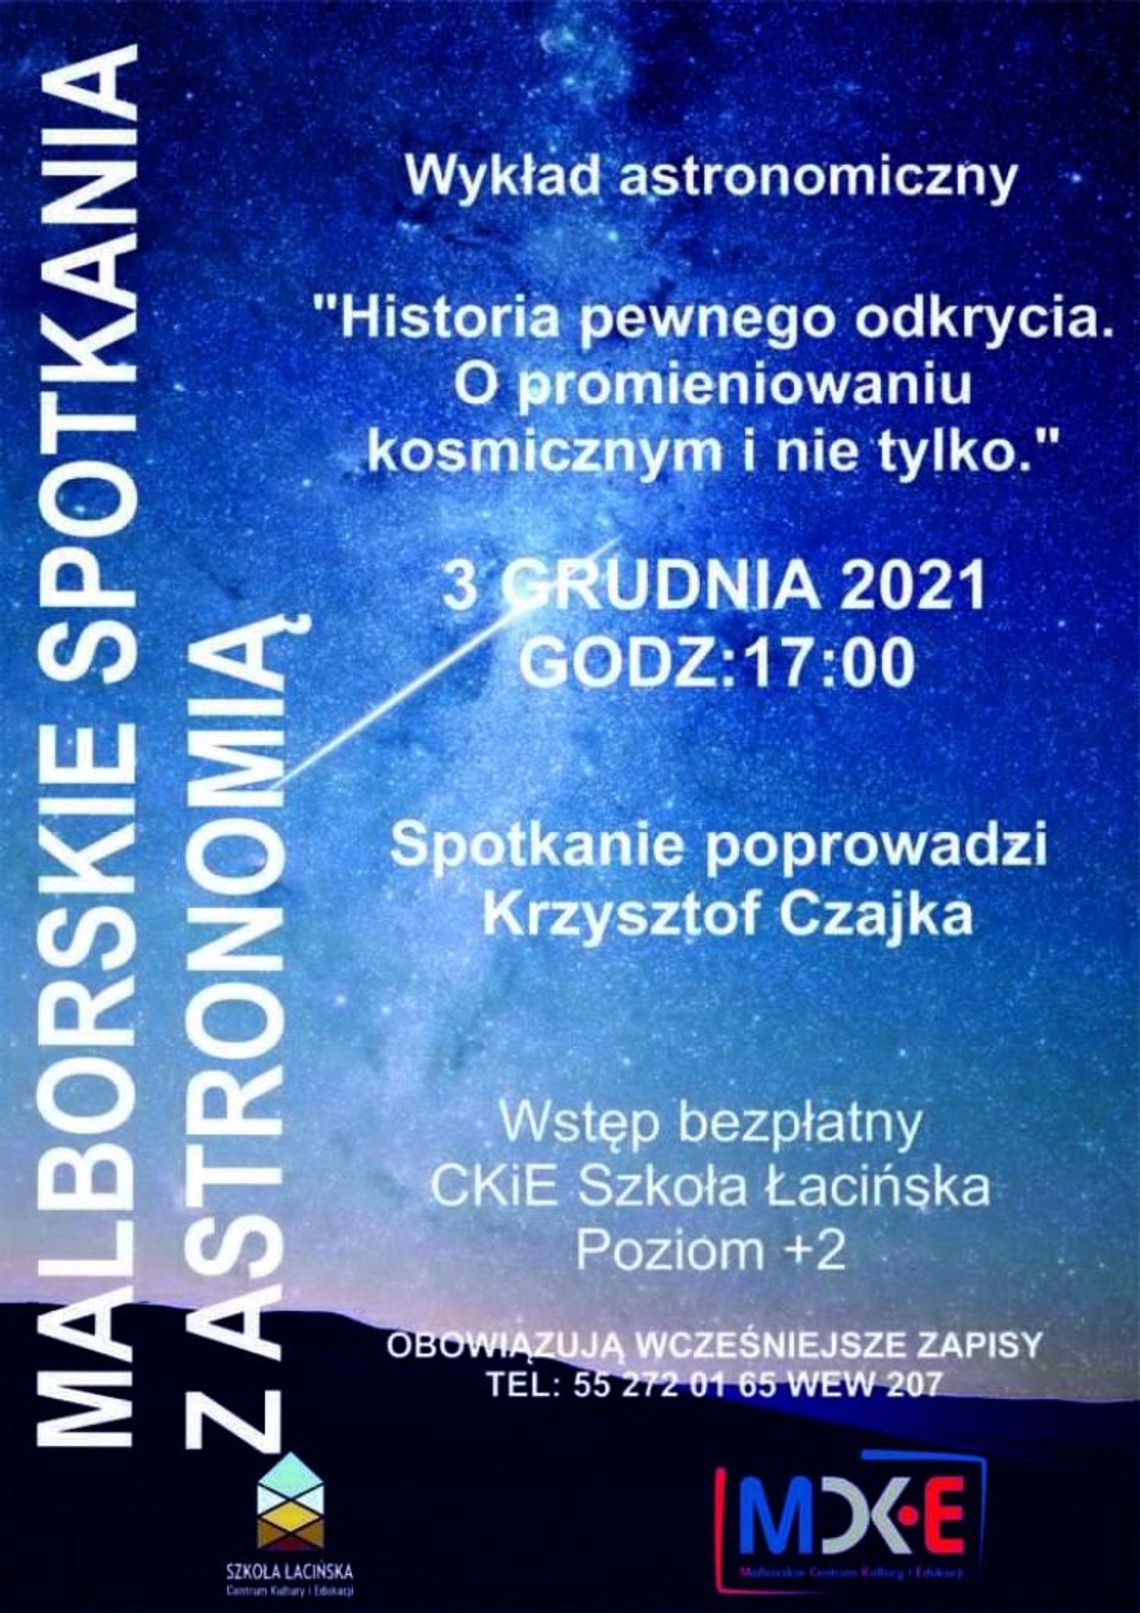 Malborskie Spotkania z Astronomią